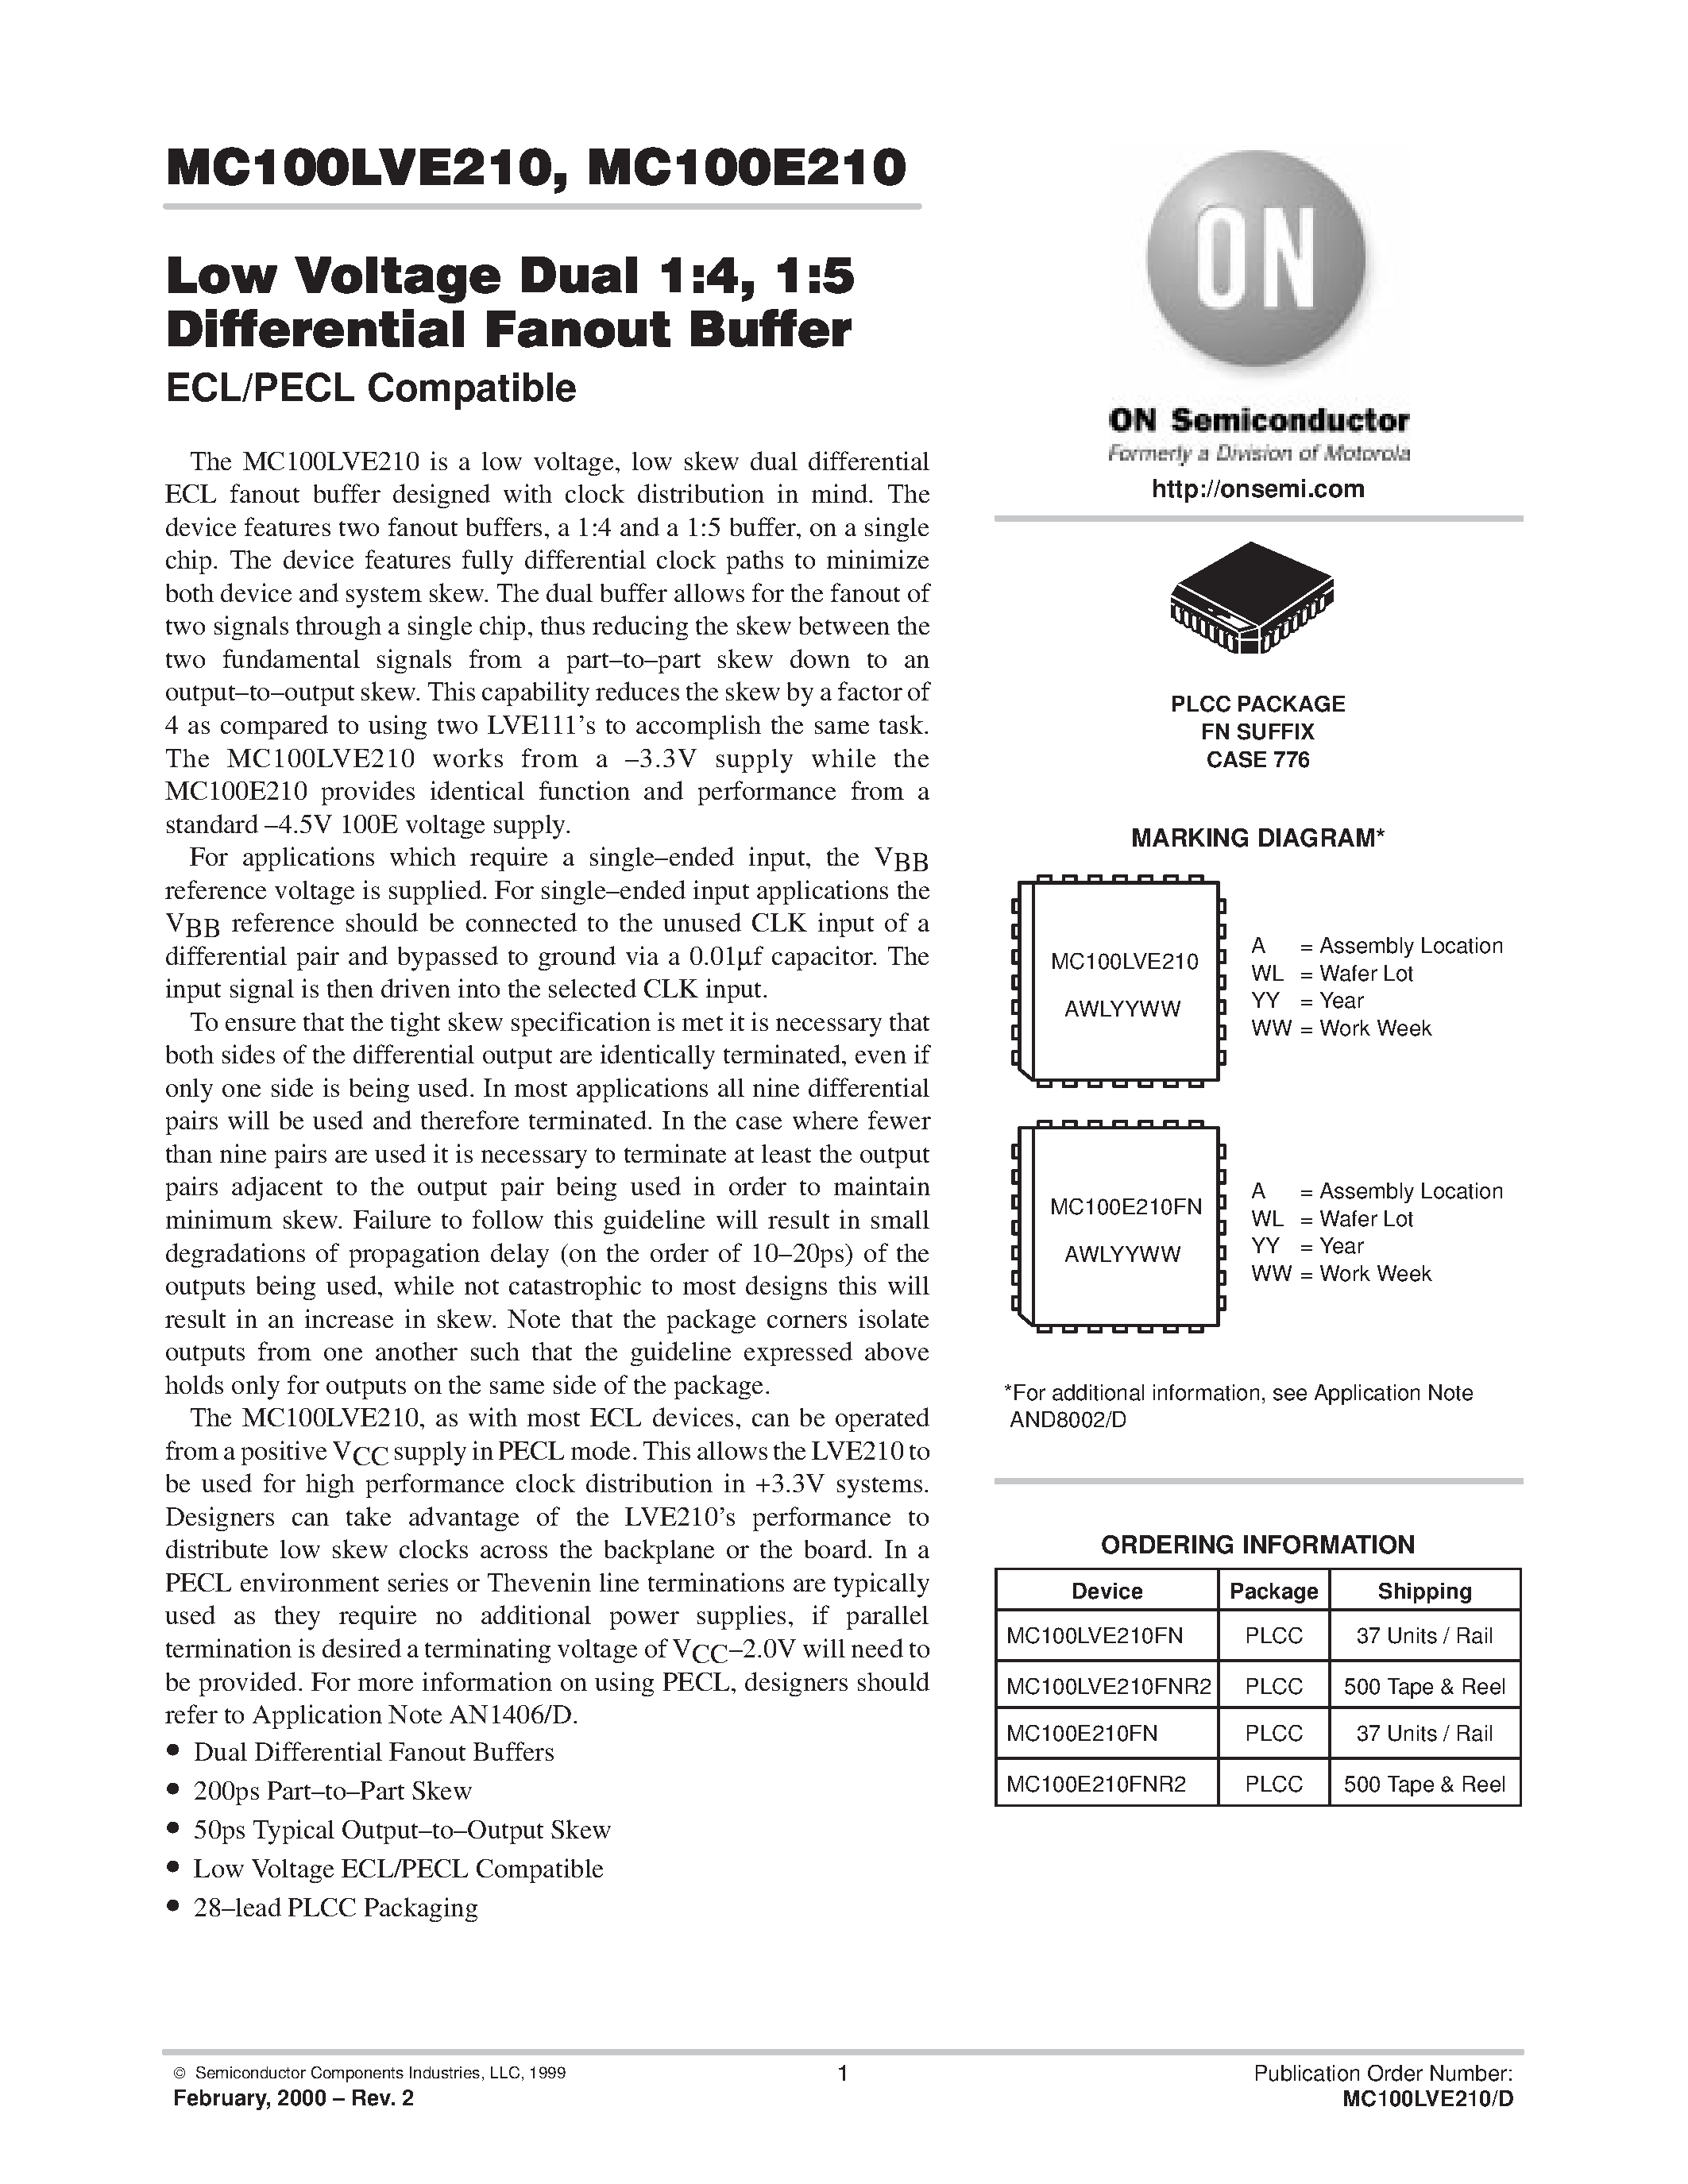 Datasheet MC100E210FNR2 - Low Voltage Dual 1:4 / 1:5 Differential Fanout Buffer page 1